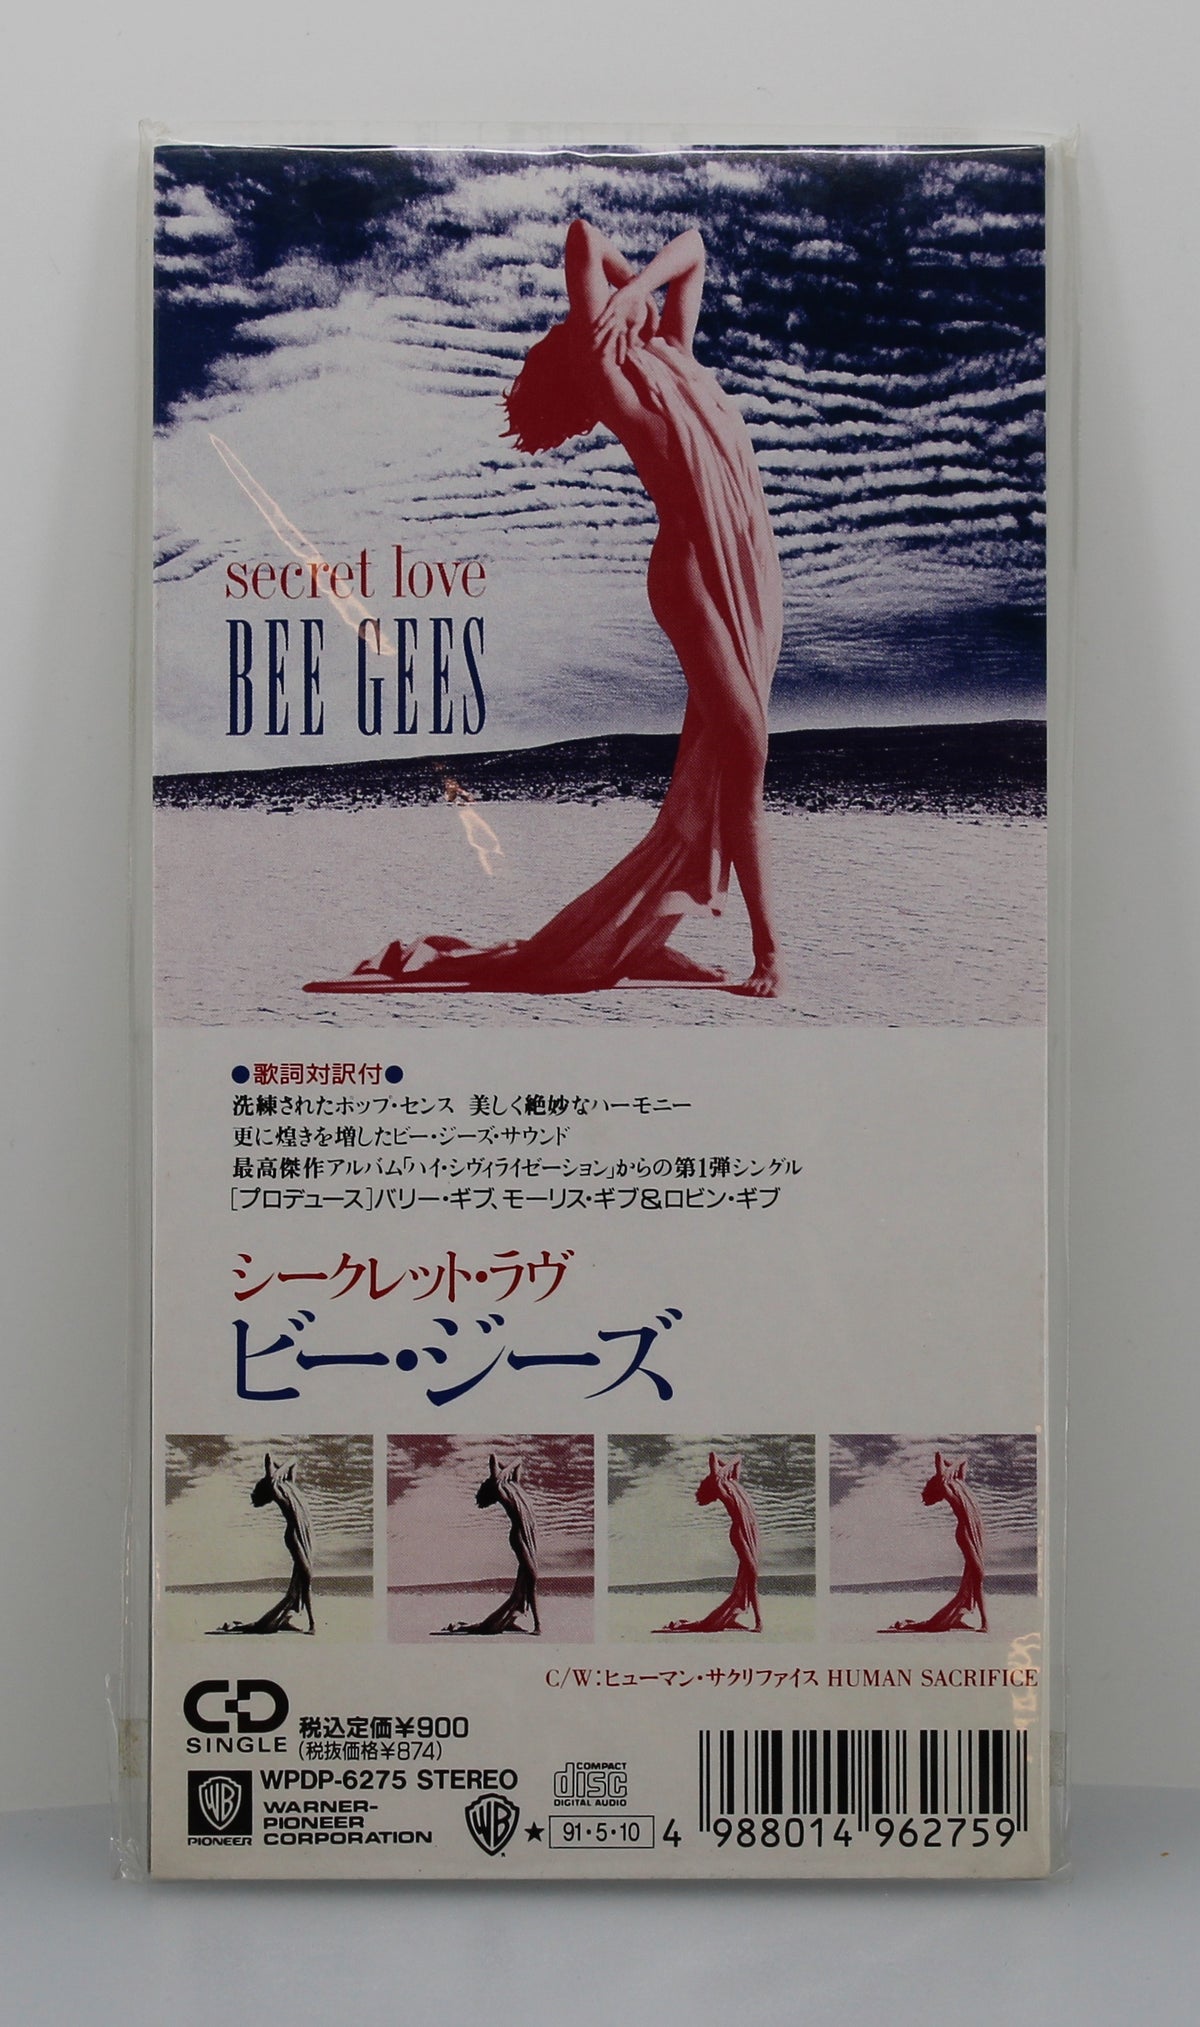 Bee Gees – Secret Love, CD, Single, Mini, Japan 1991